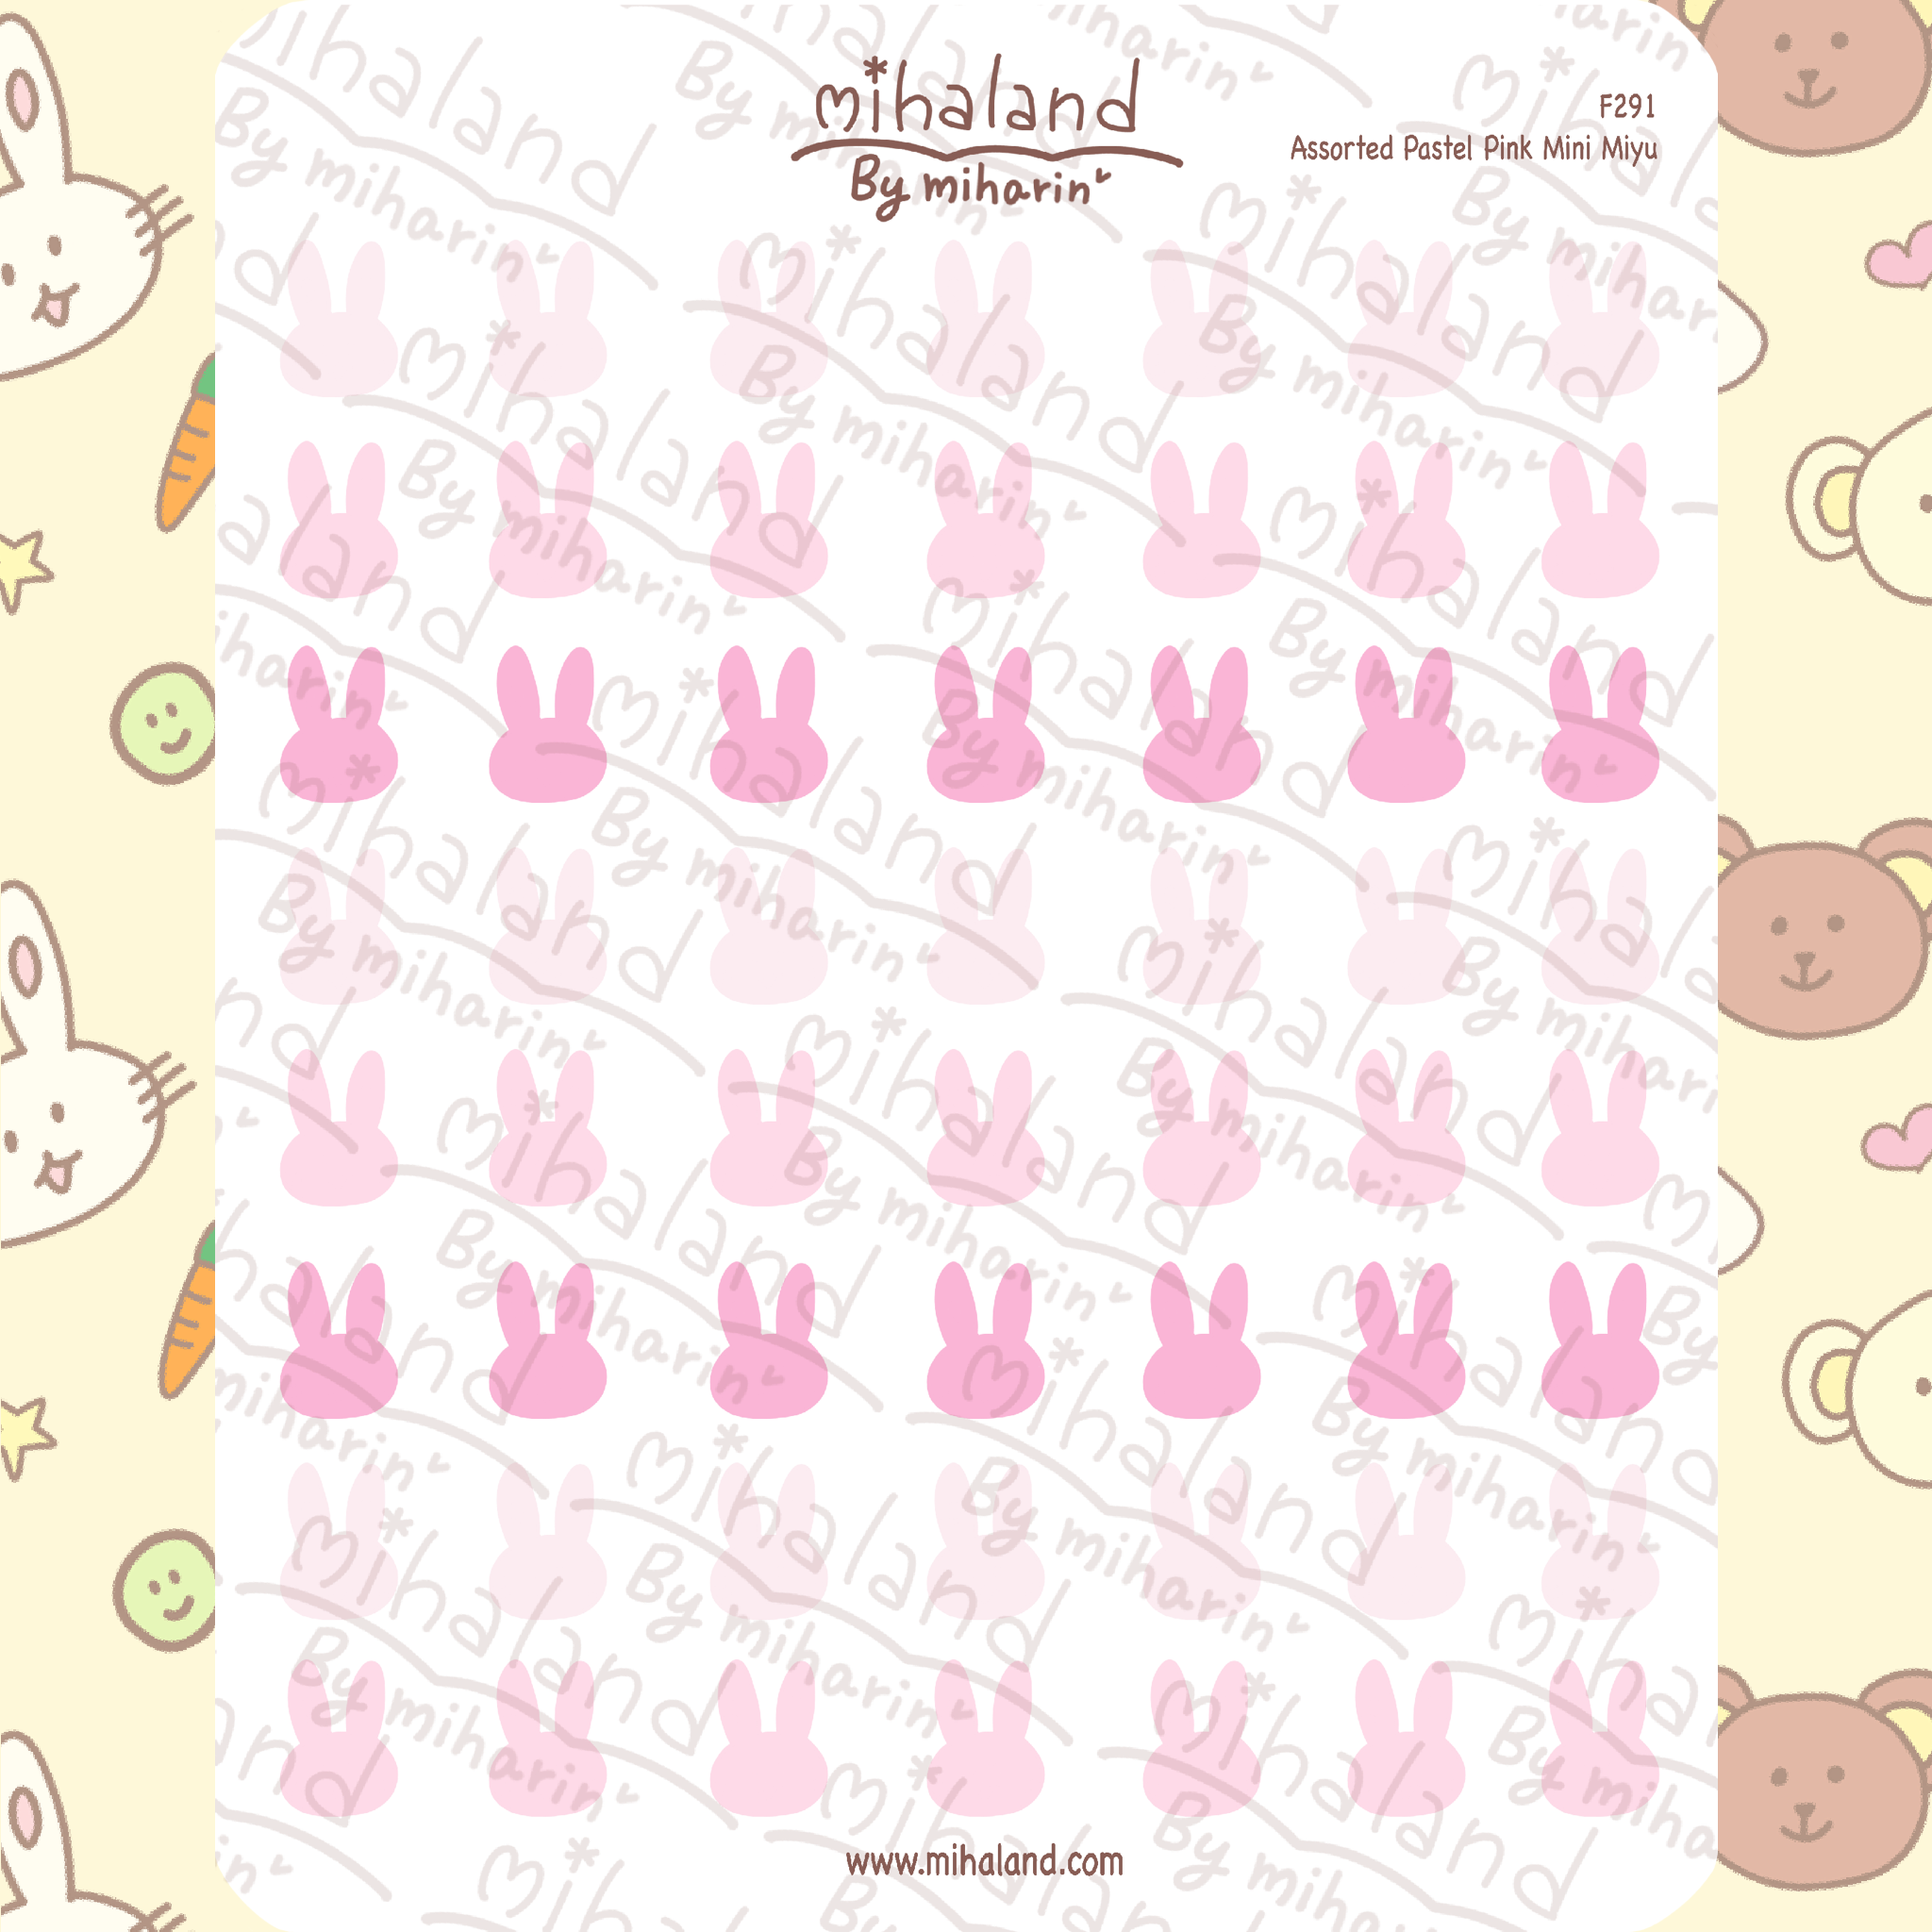 Assorted Pastel Pink Mini Miyu Planner Stickers (F291)